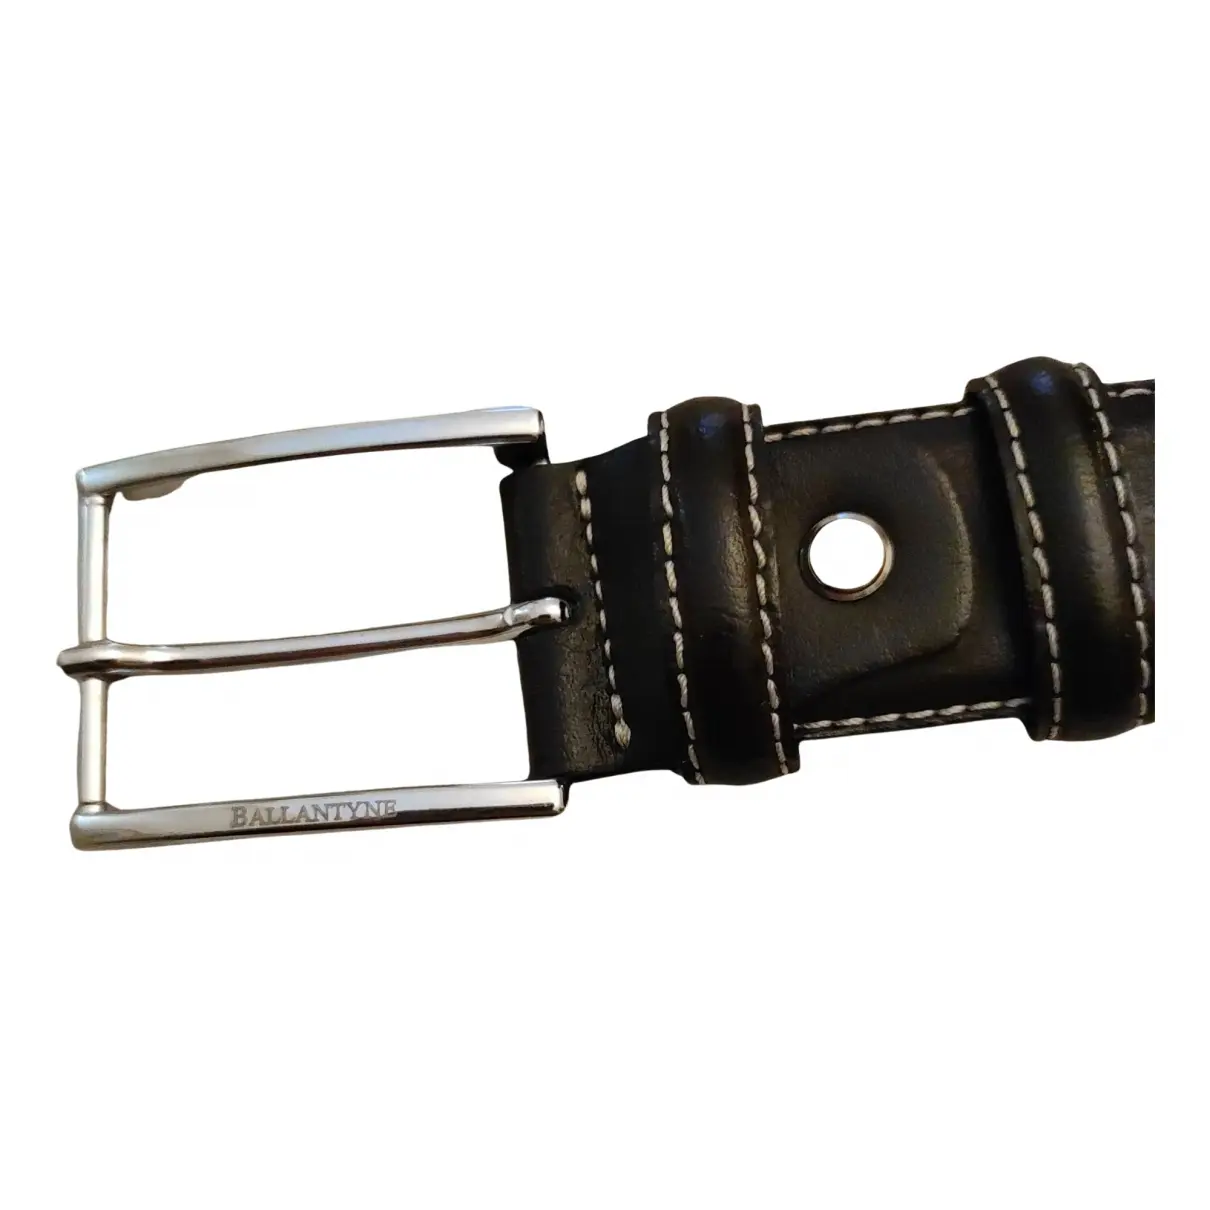 Leather belt Ballantyne